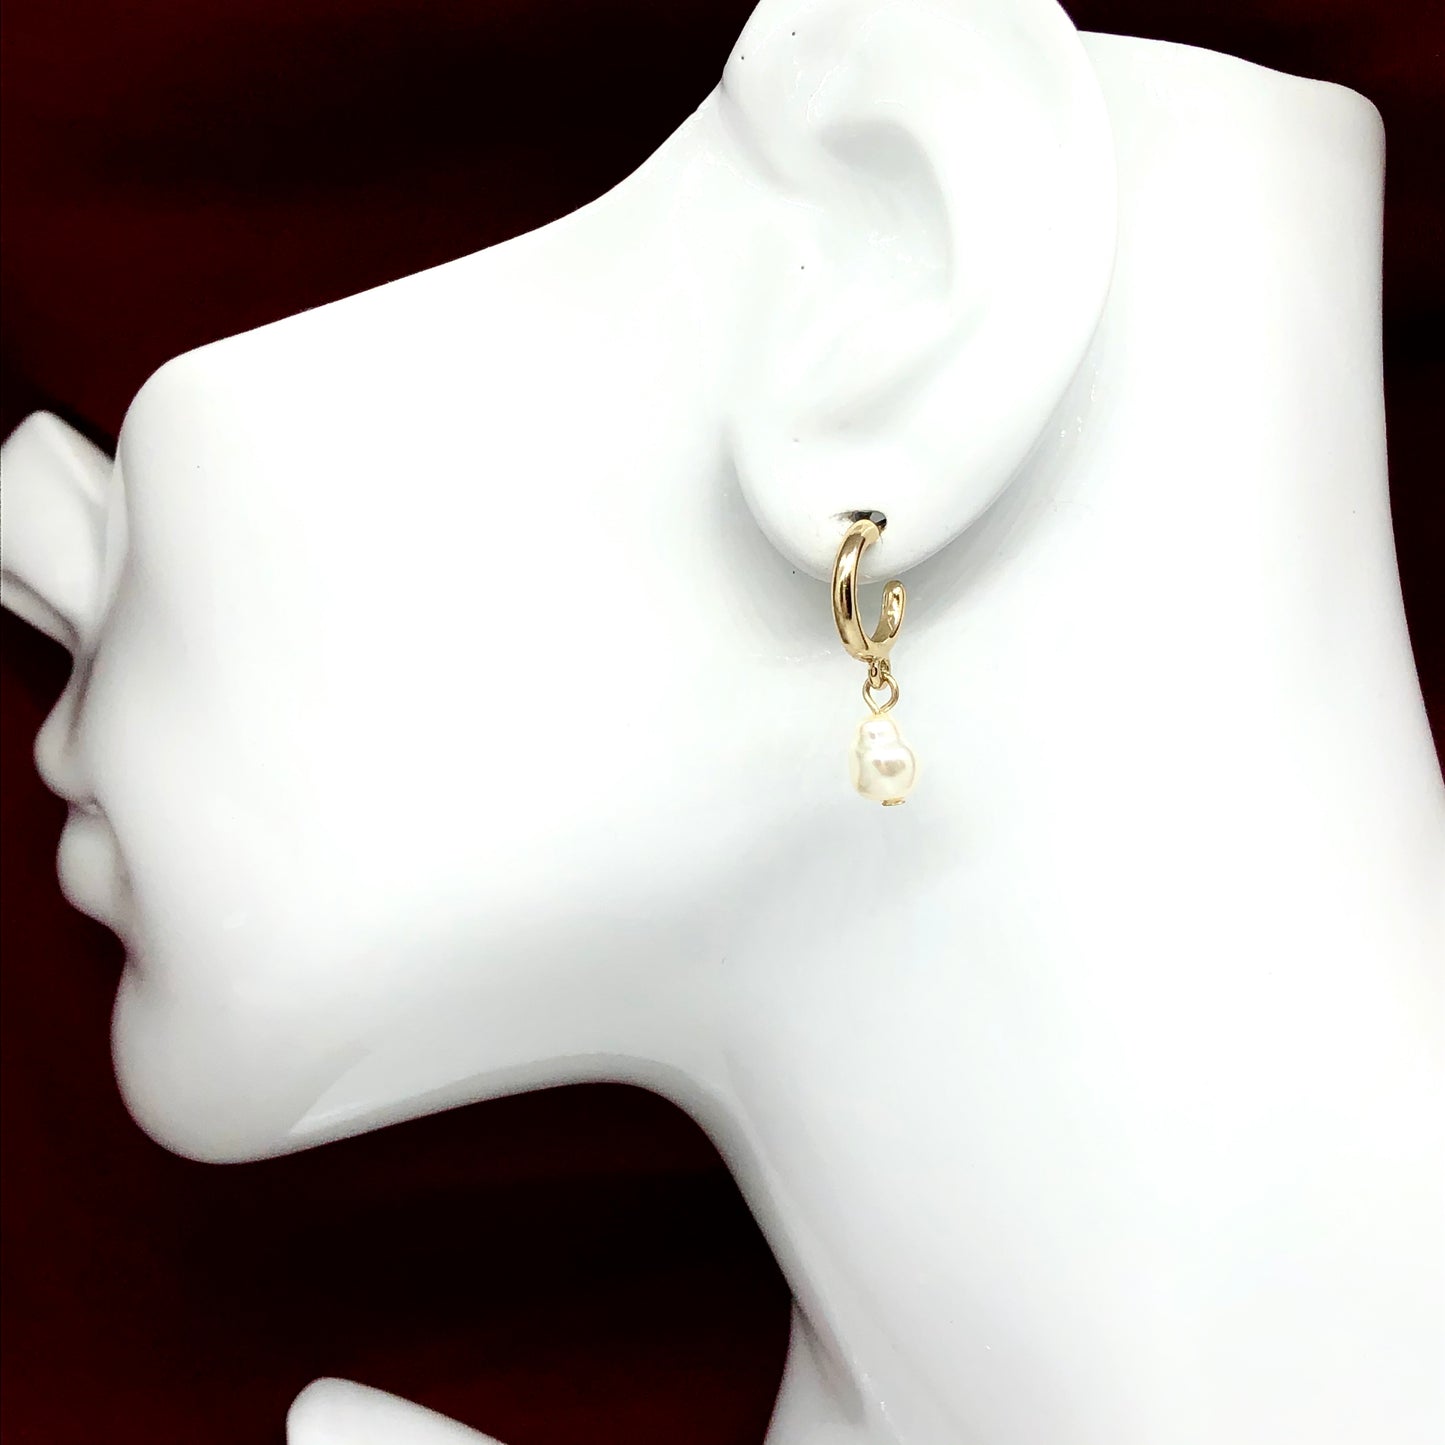 Jewelry | Gold Pearl Dangle Style Small Semi Hoop Earrings at Blingschlingers Jewelry